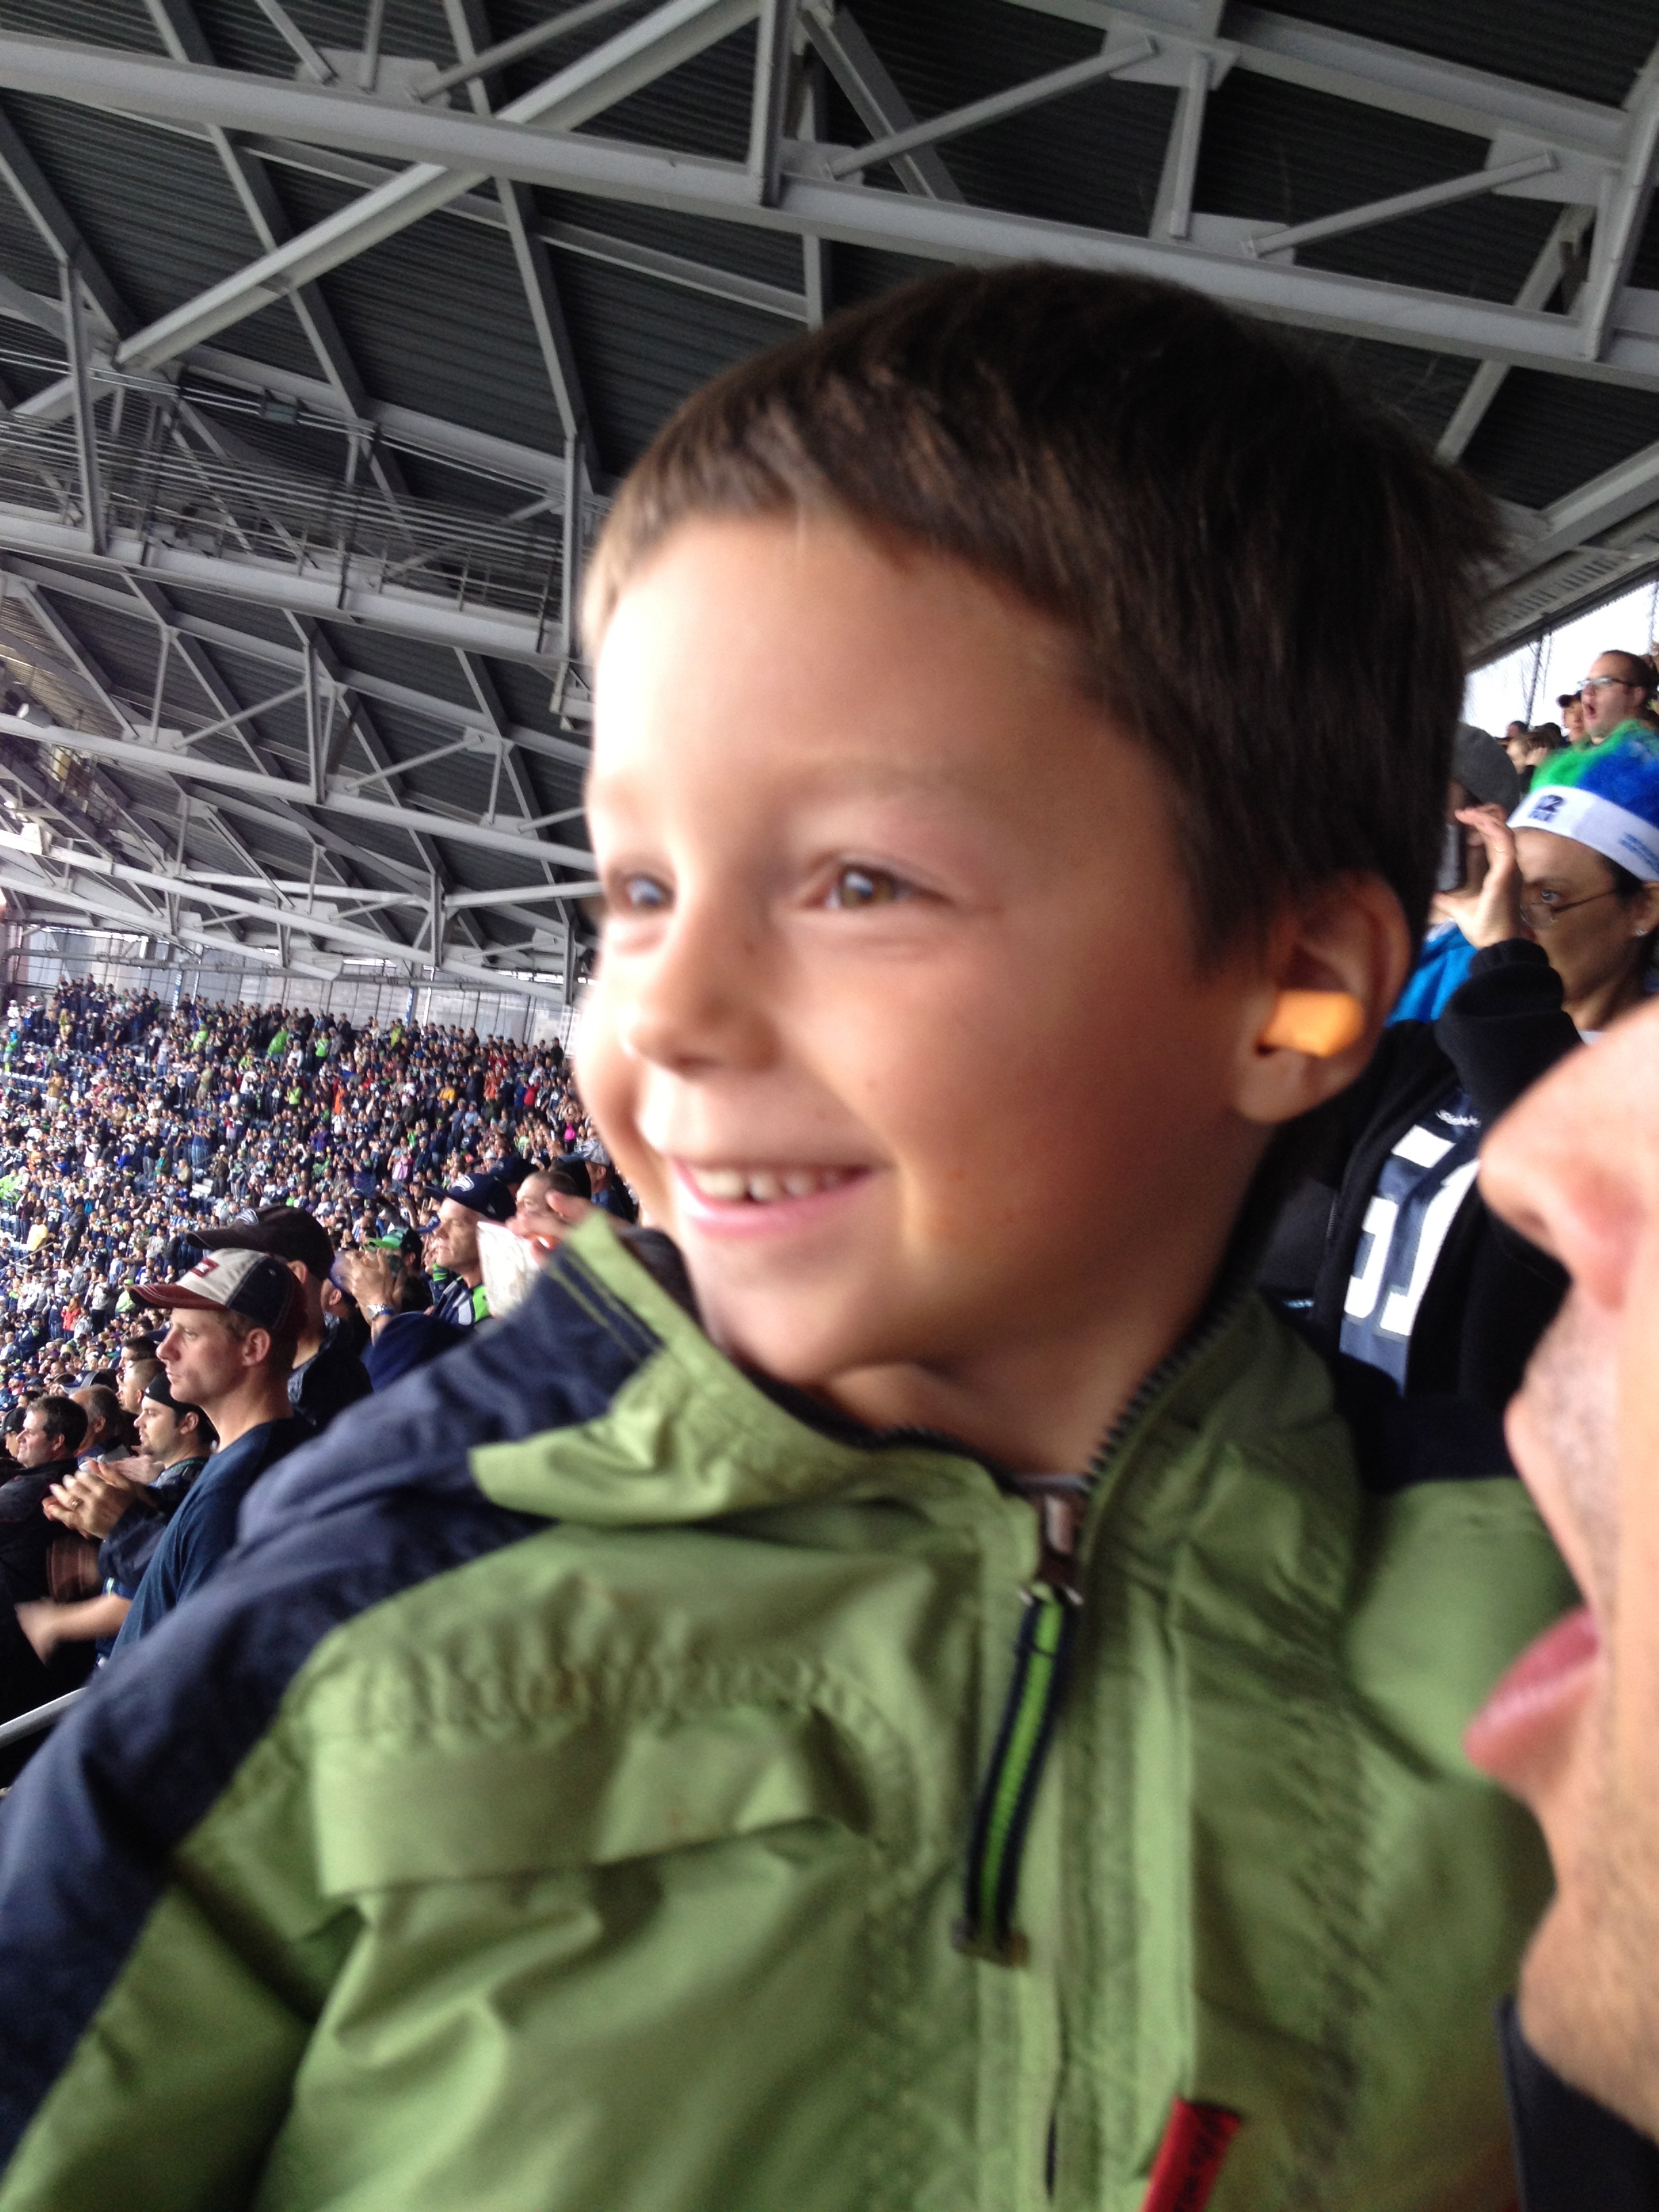 Seahawks Game Ear Plugs Prevent Noise Damage Kids